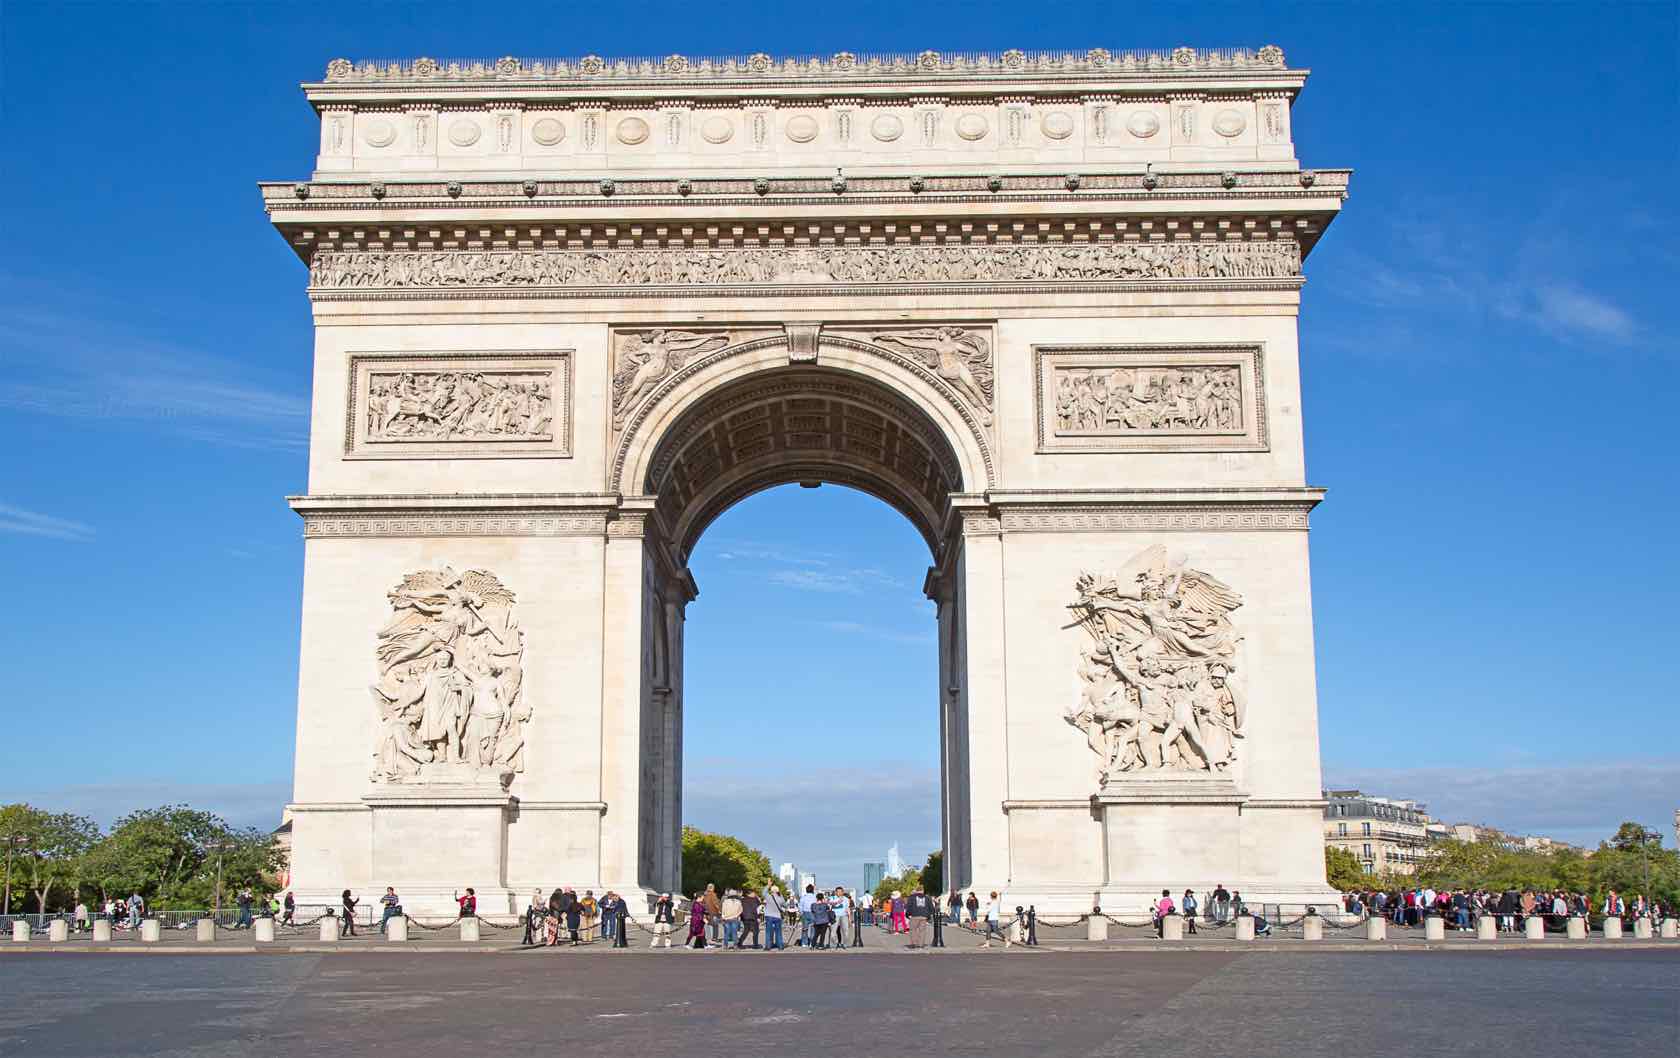 gjorde det Andragende nederdel Visiting the Arc De Triomphe in Paris - Paris Perfect